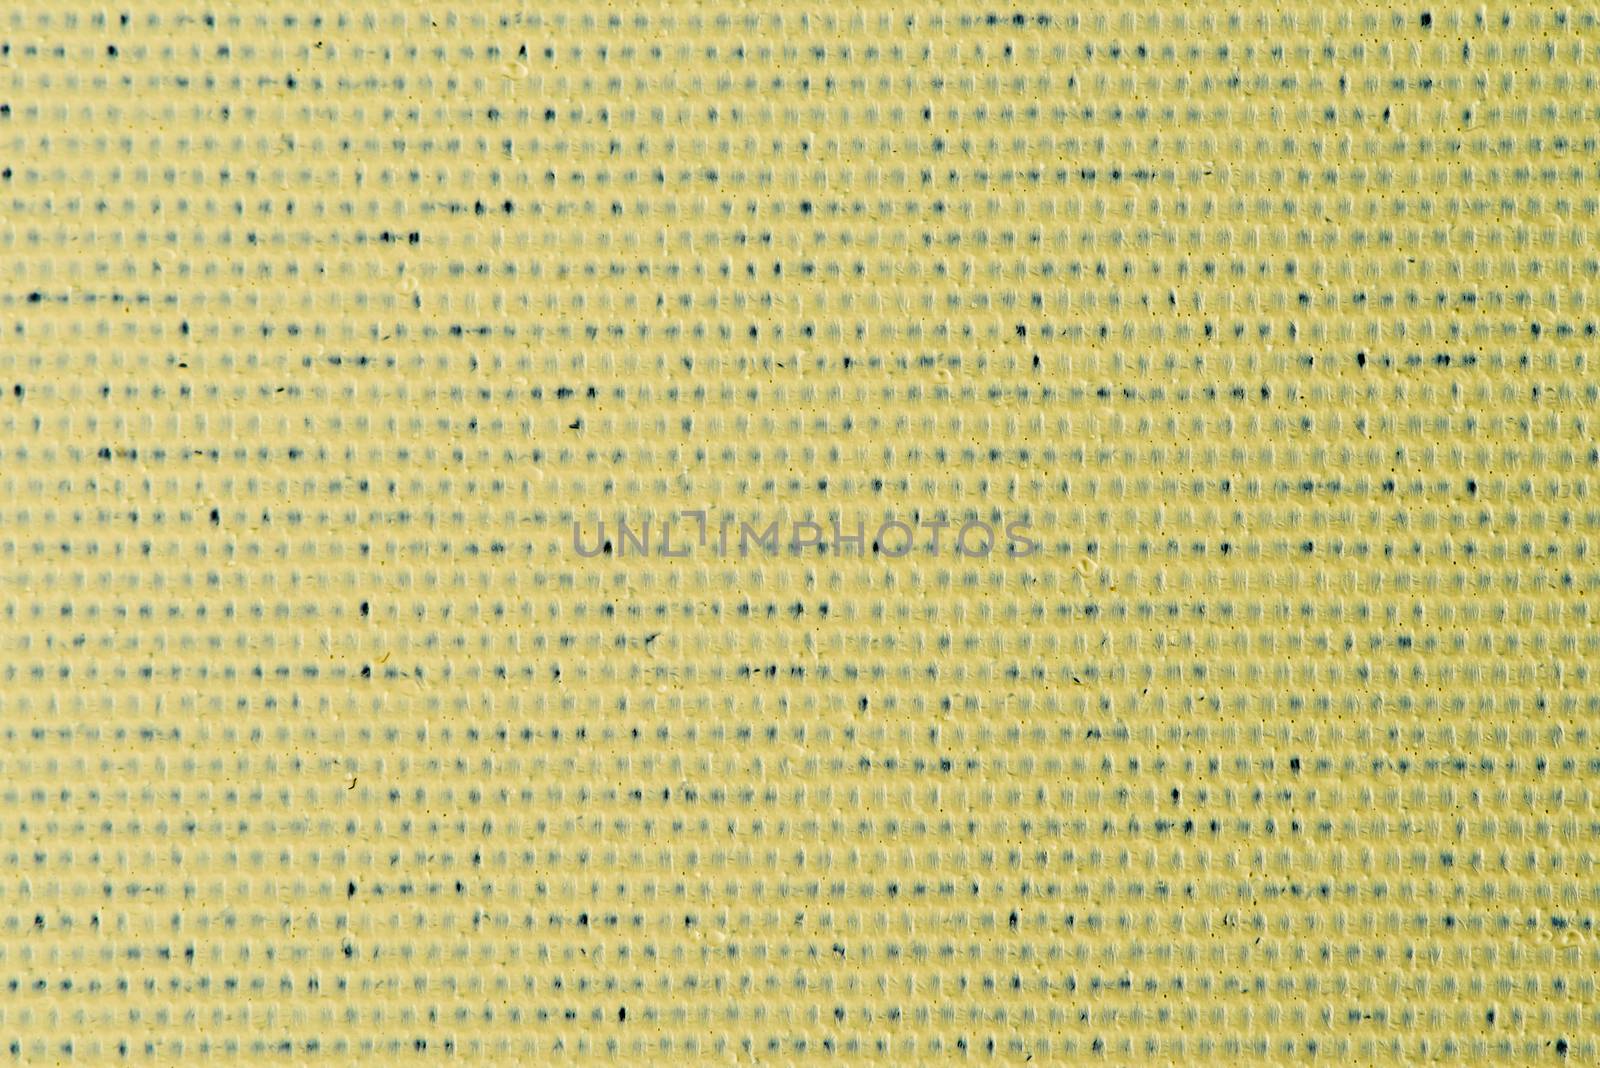 Green vinyl texture by homydesign